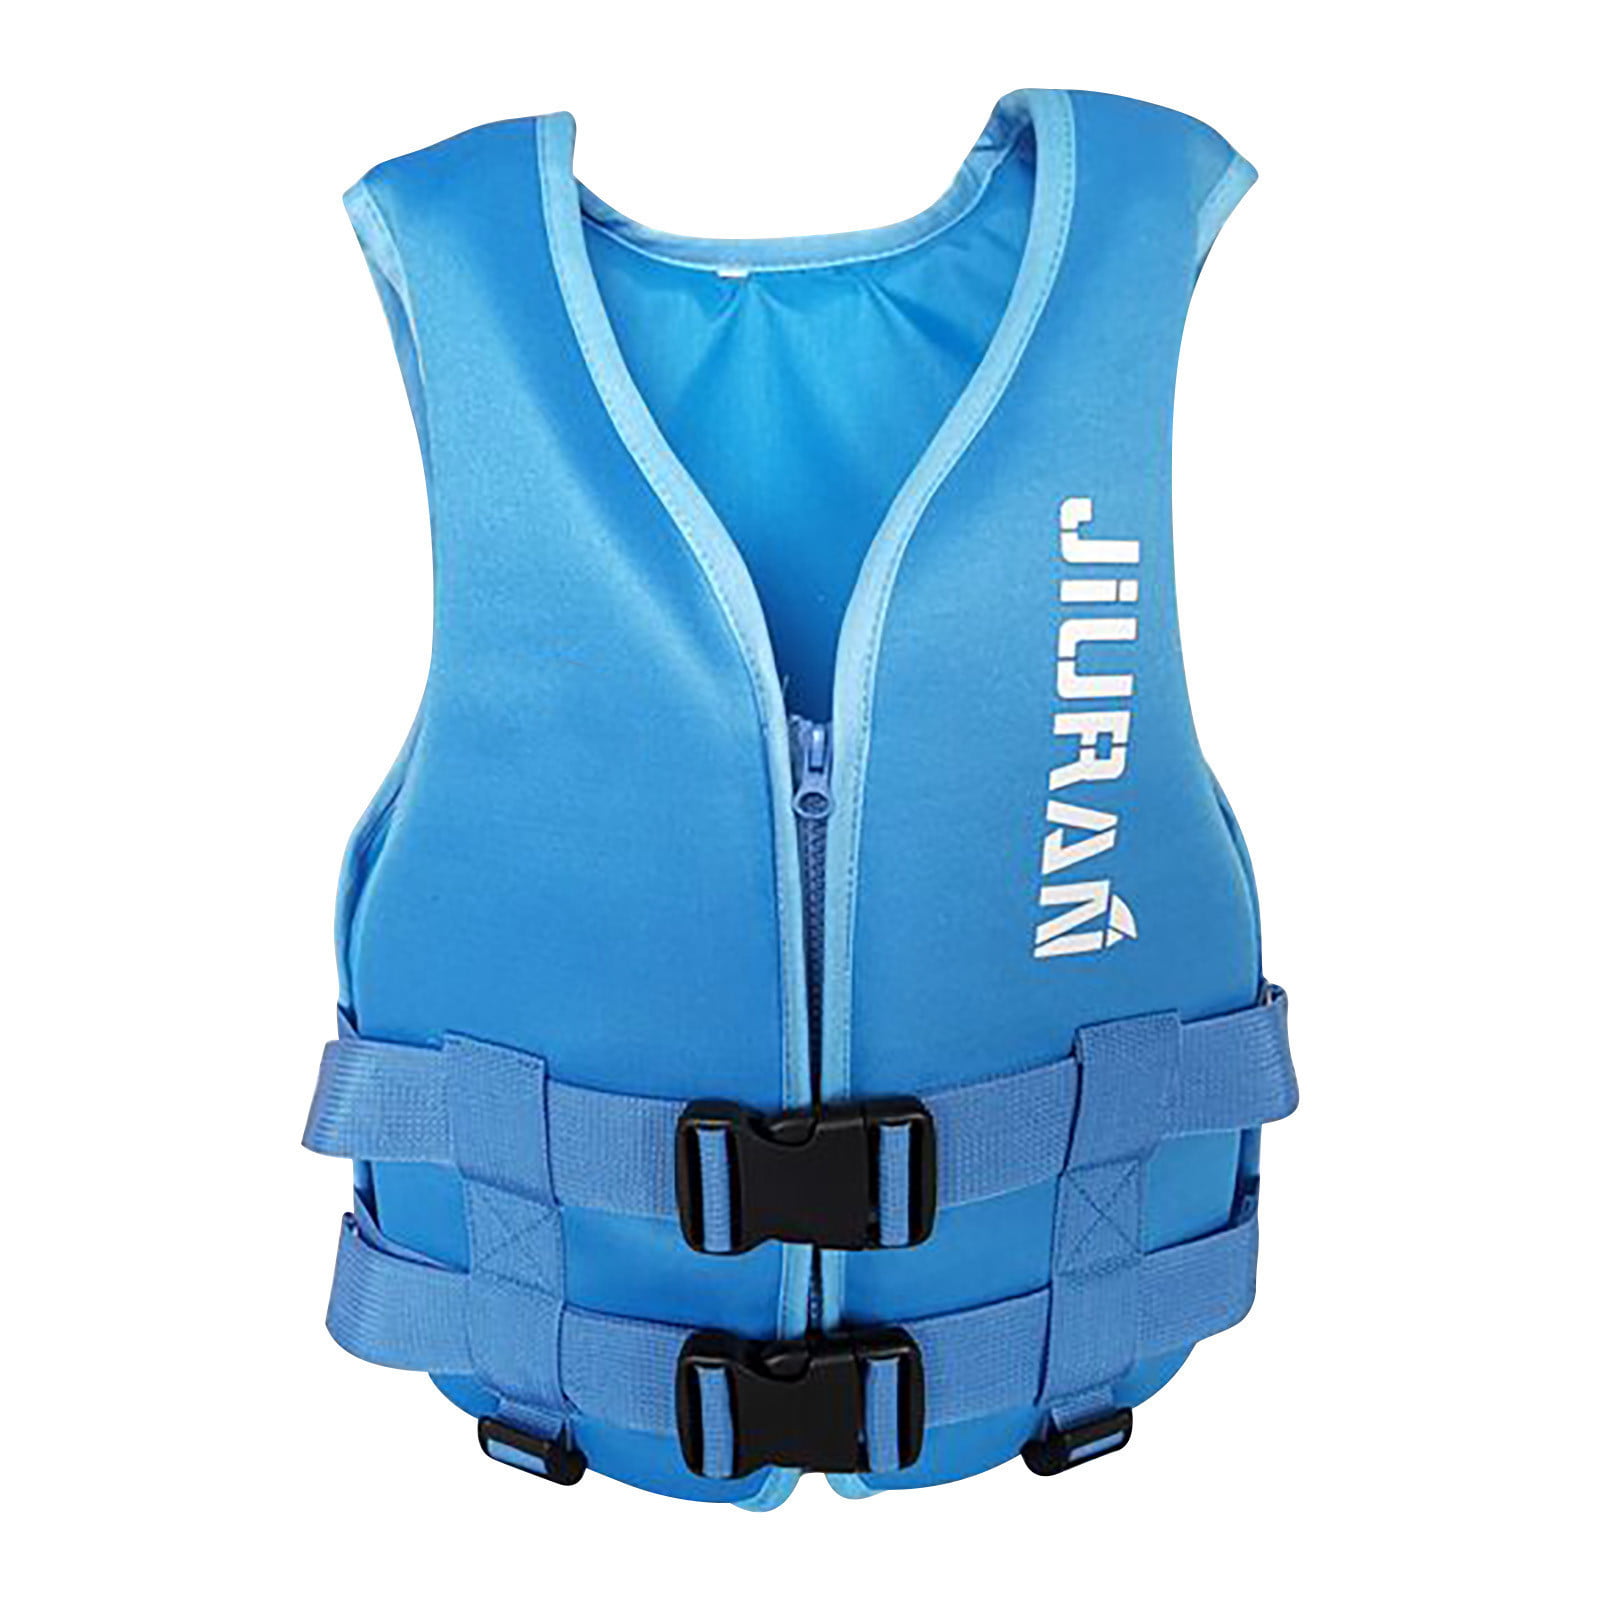 Adults Kids Life Jackets Vest Kayak Buoyancy Aid Safe Sailing Swim Watersport UK 